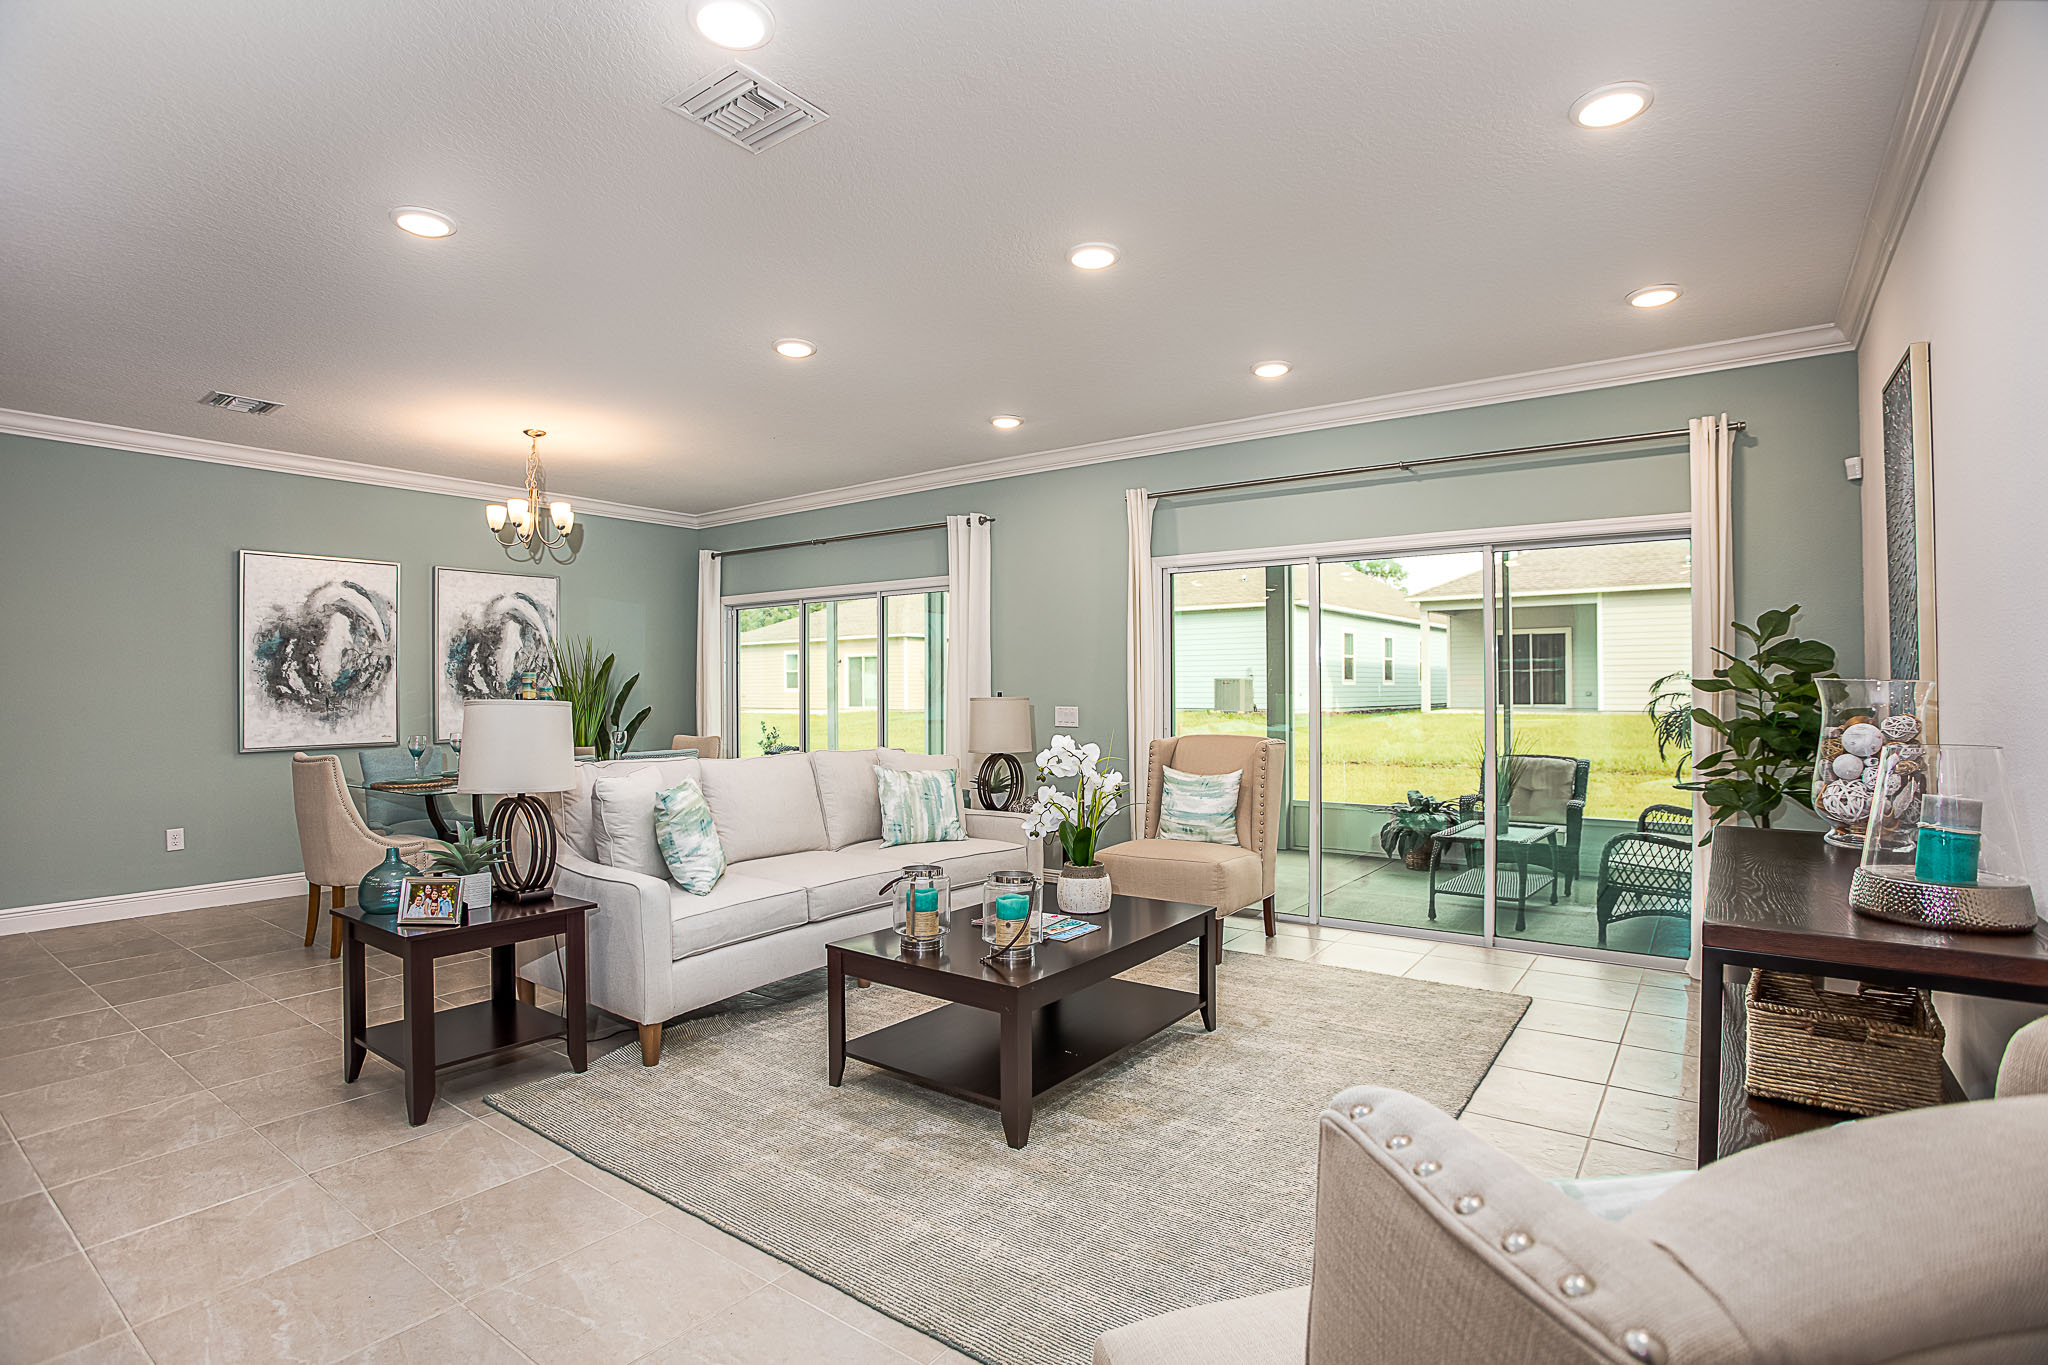 Modern livingroom in a new home in Milton, FL